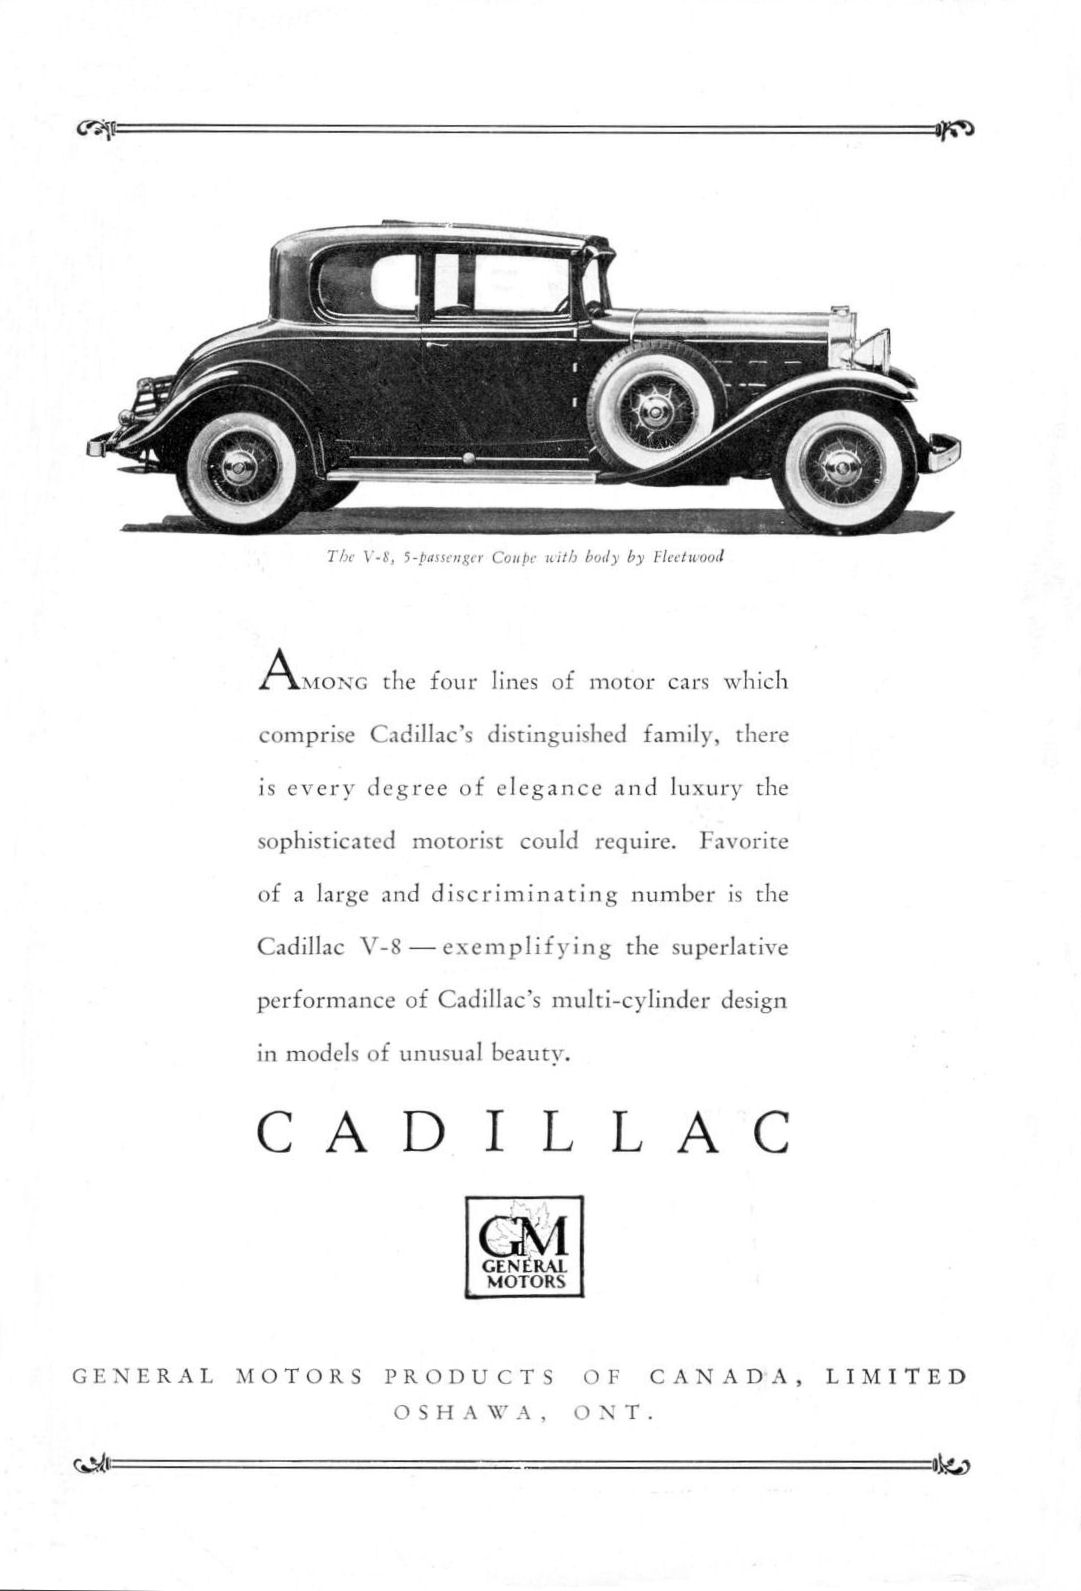 1931 Cadillac - Canad1